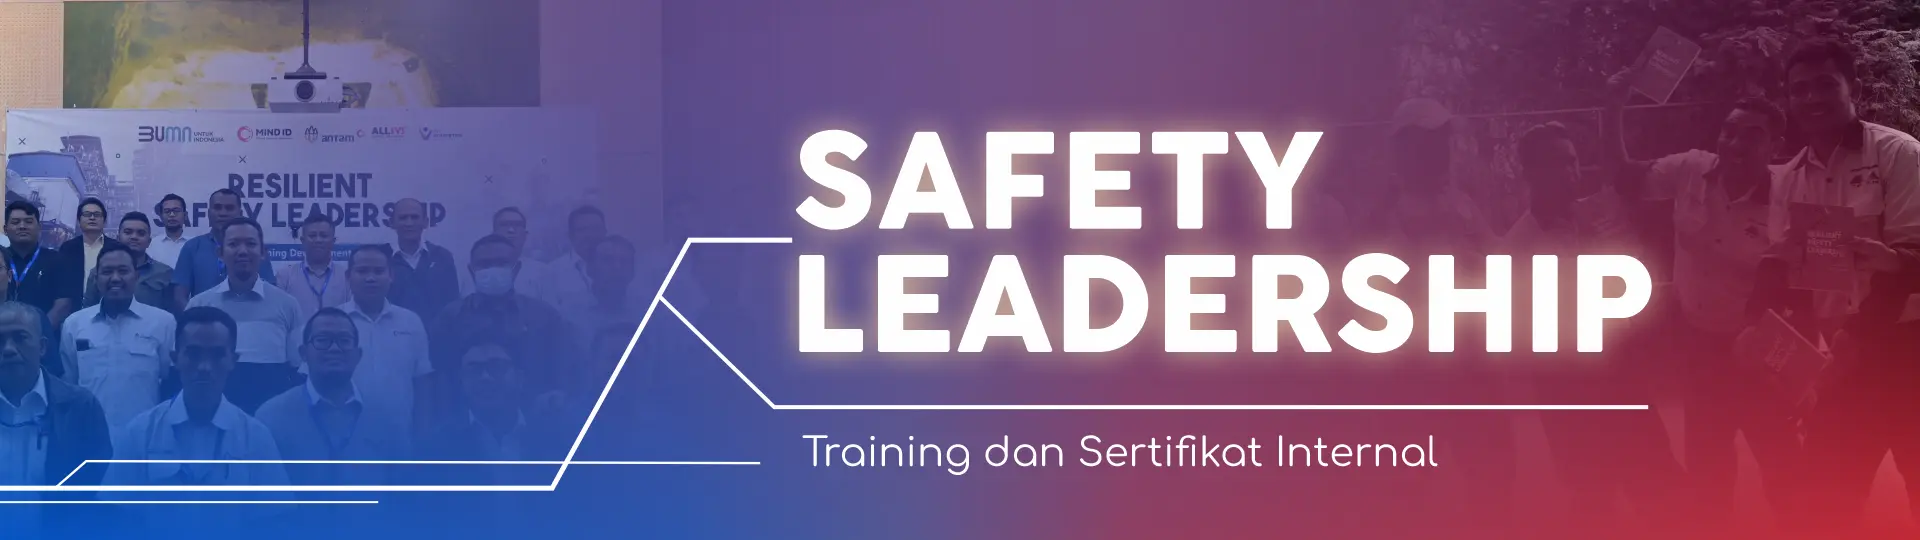 Training dan Sertifikat Internal Safety Leadership Allsys Group (Allsys Solutions)